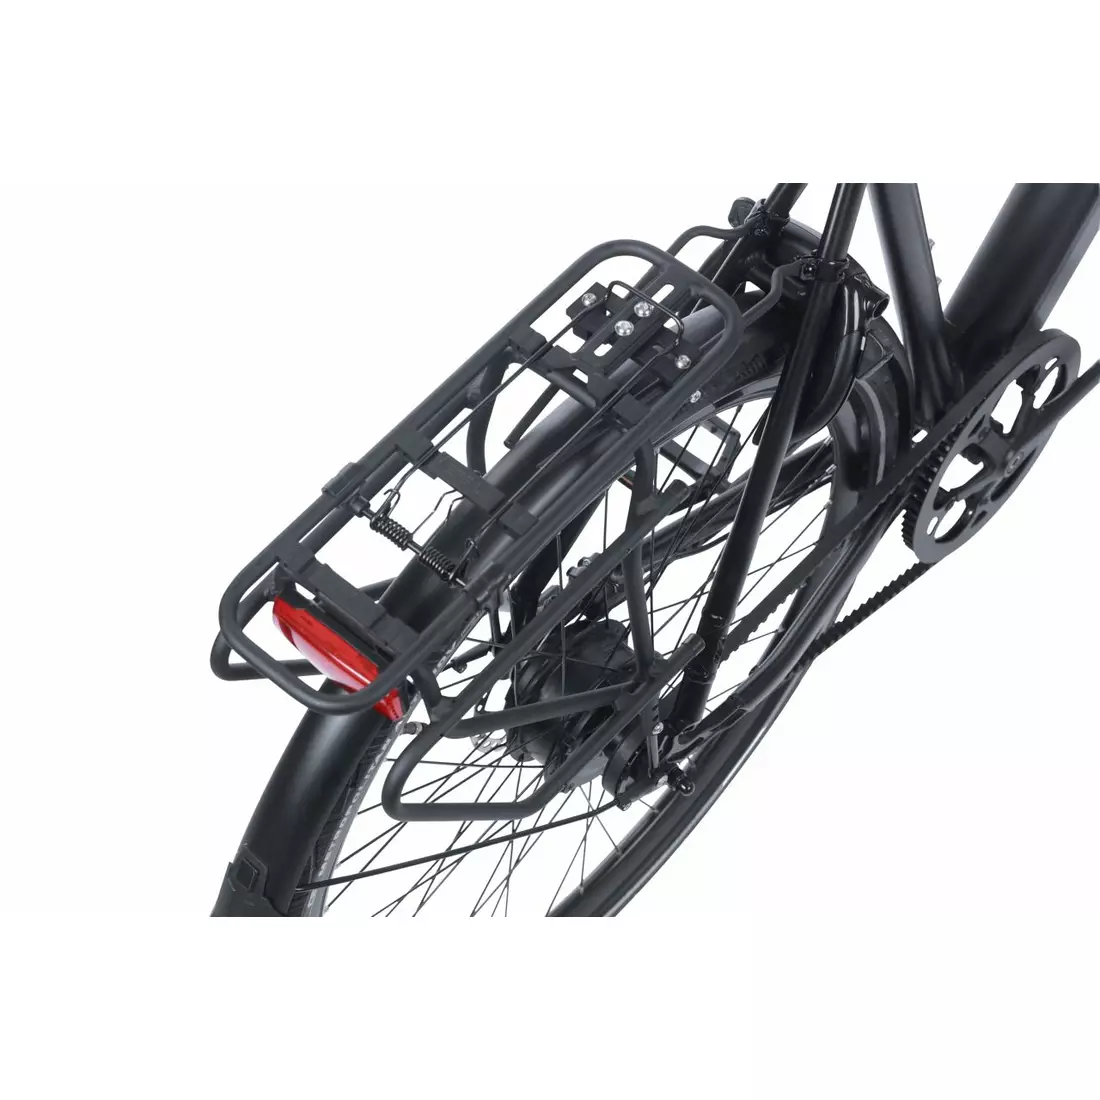 BASIL UNIVERSAL CARGO MIK suport spate pentru biciclete, negru mat